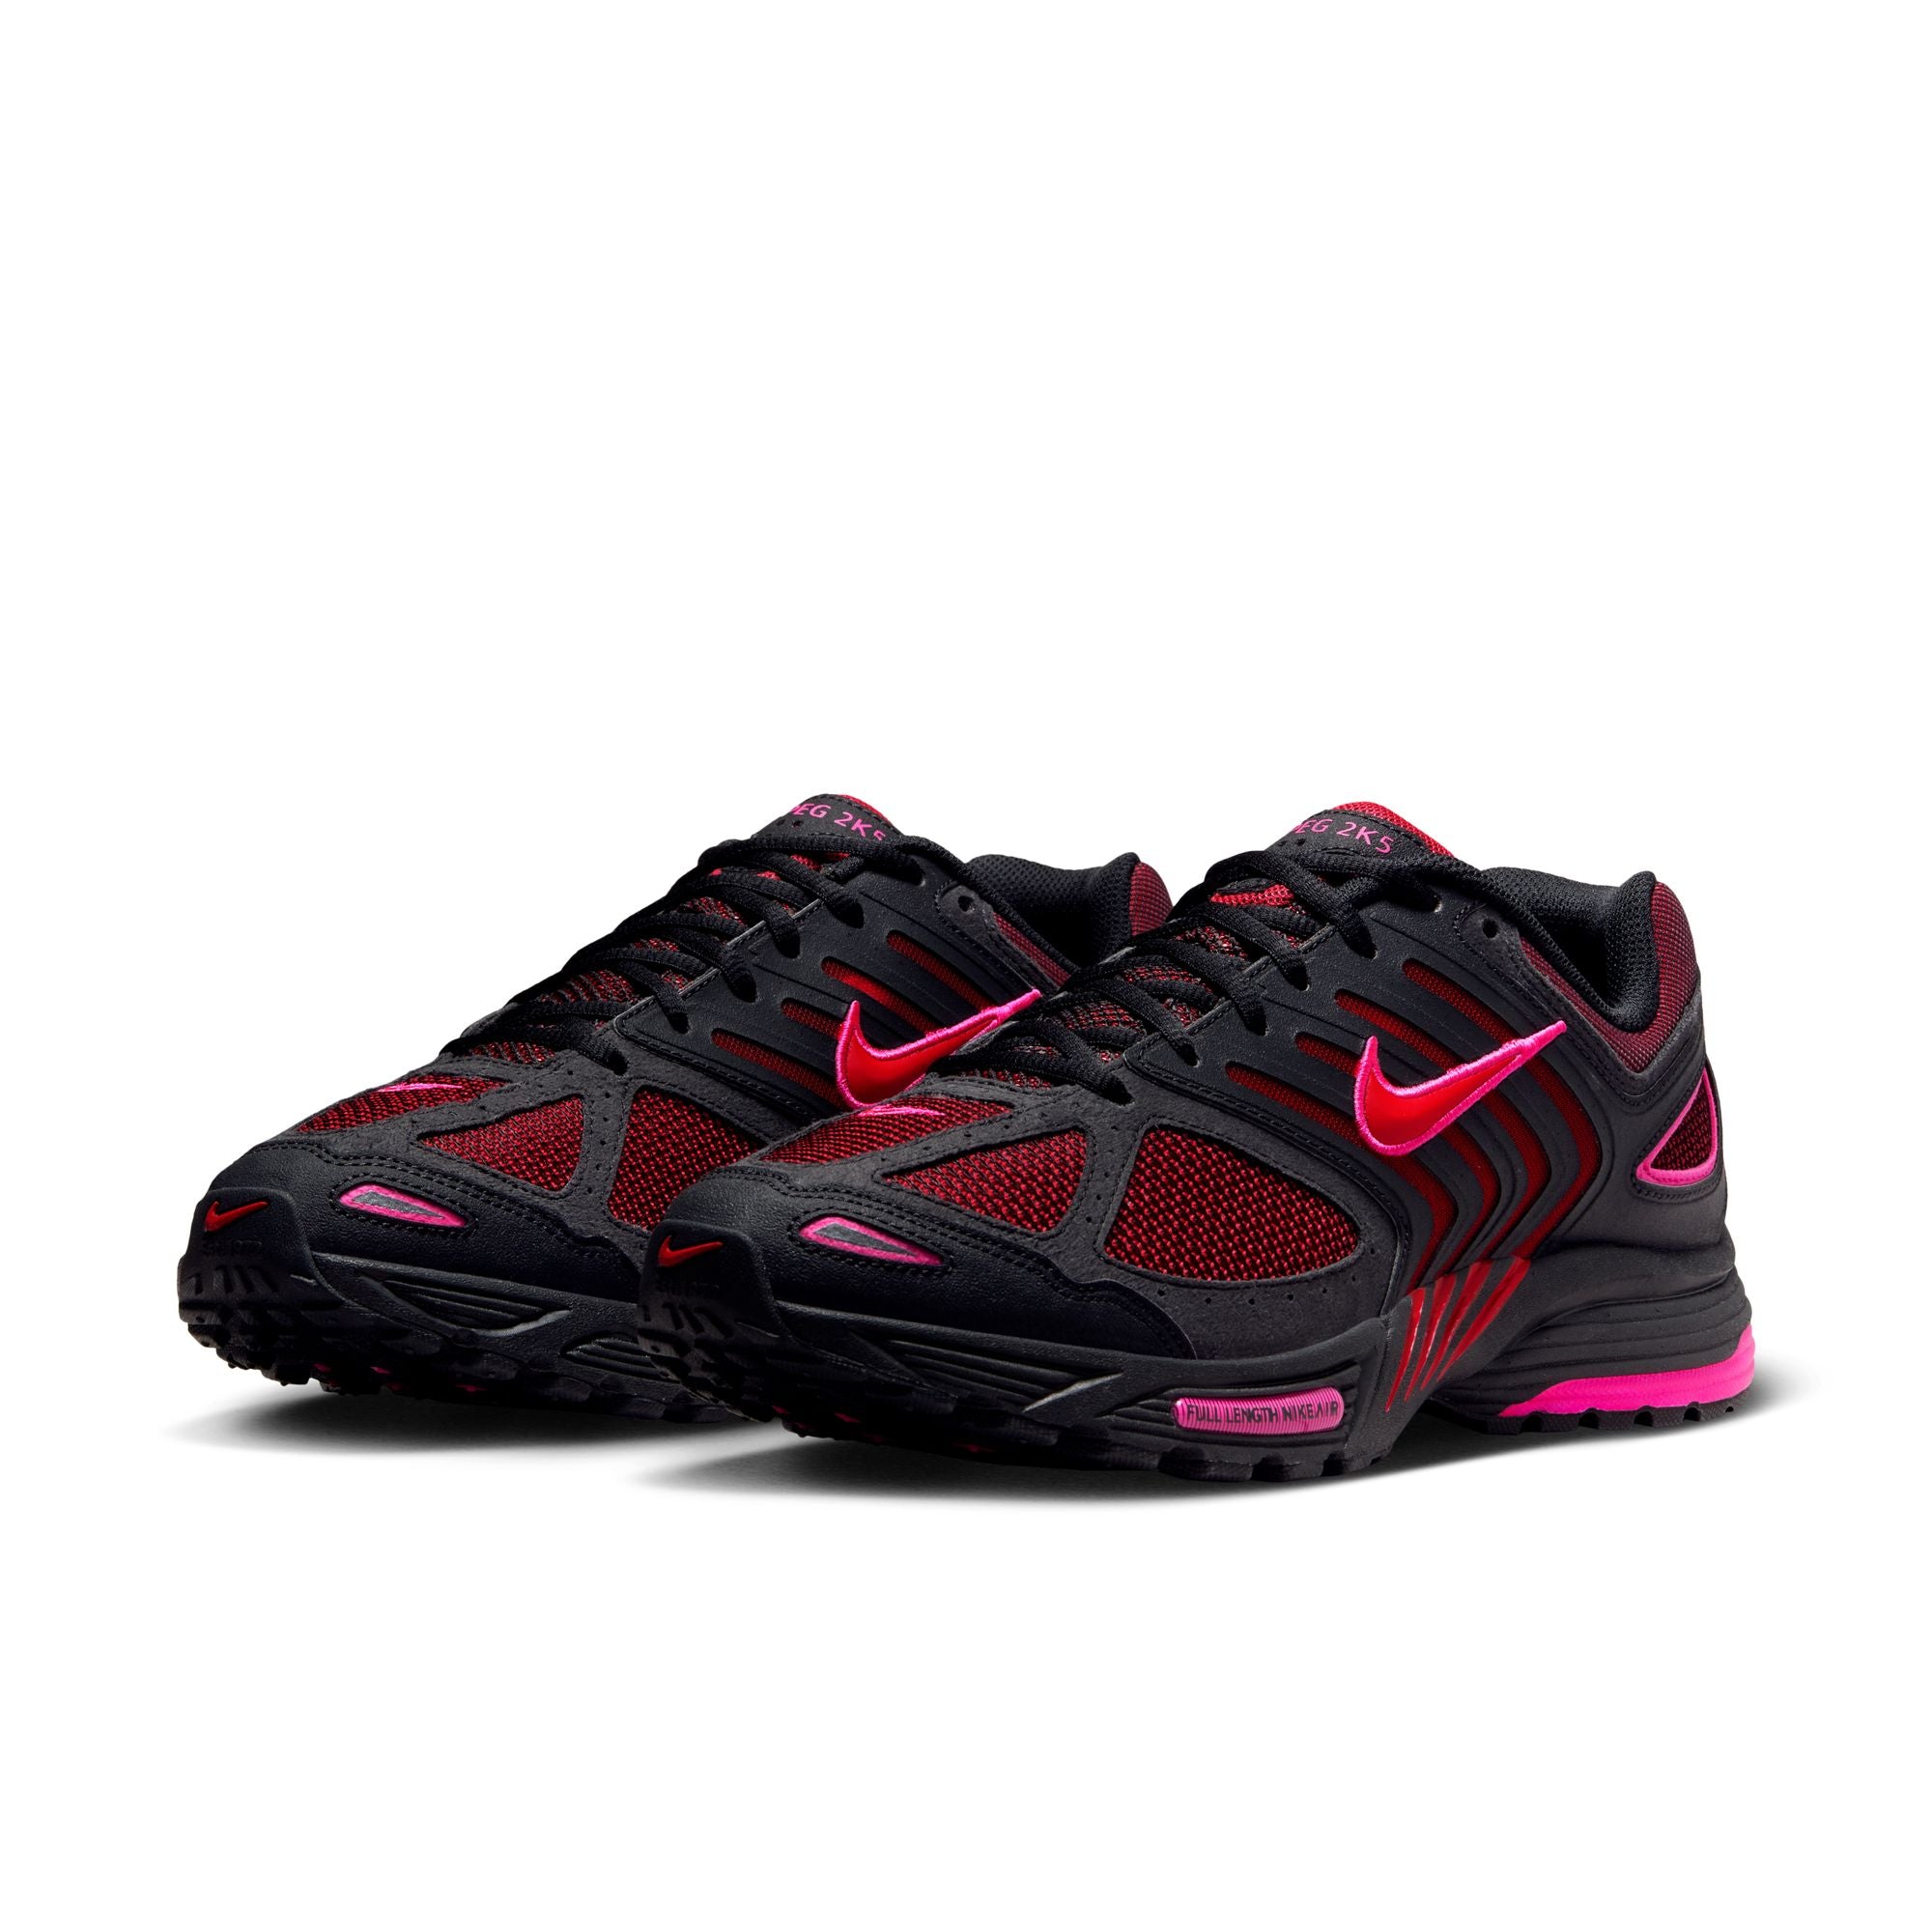 NIKE - Nike Air Peg 2K5 - (Black/Fire Red-Fierce Pink-Fie) view 5